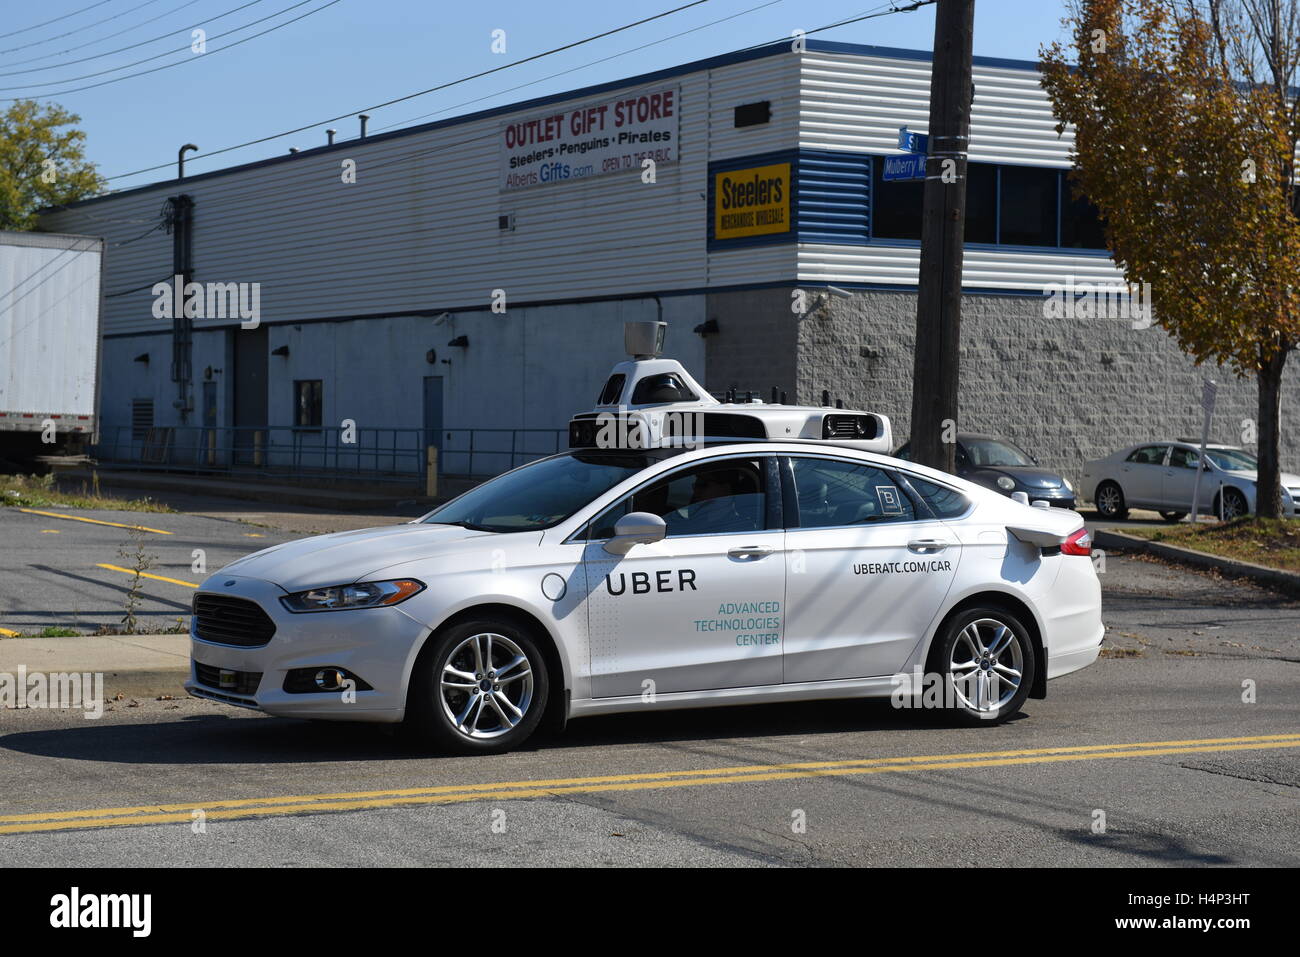 Getestet von Uber fahrerlose selbst fahren Auto Taxi-Service company in Pittsburgh, PA Stockfoto